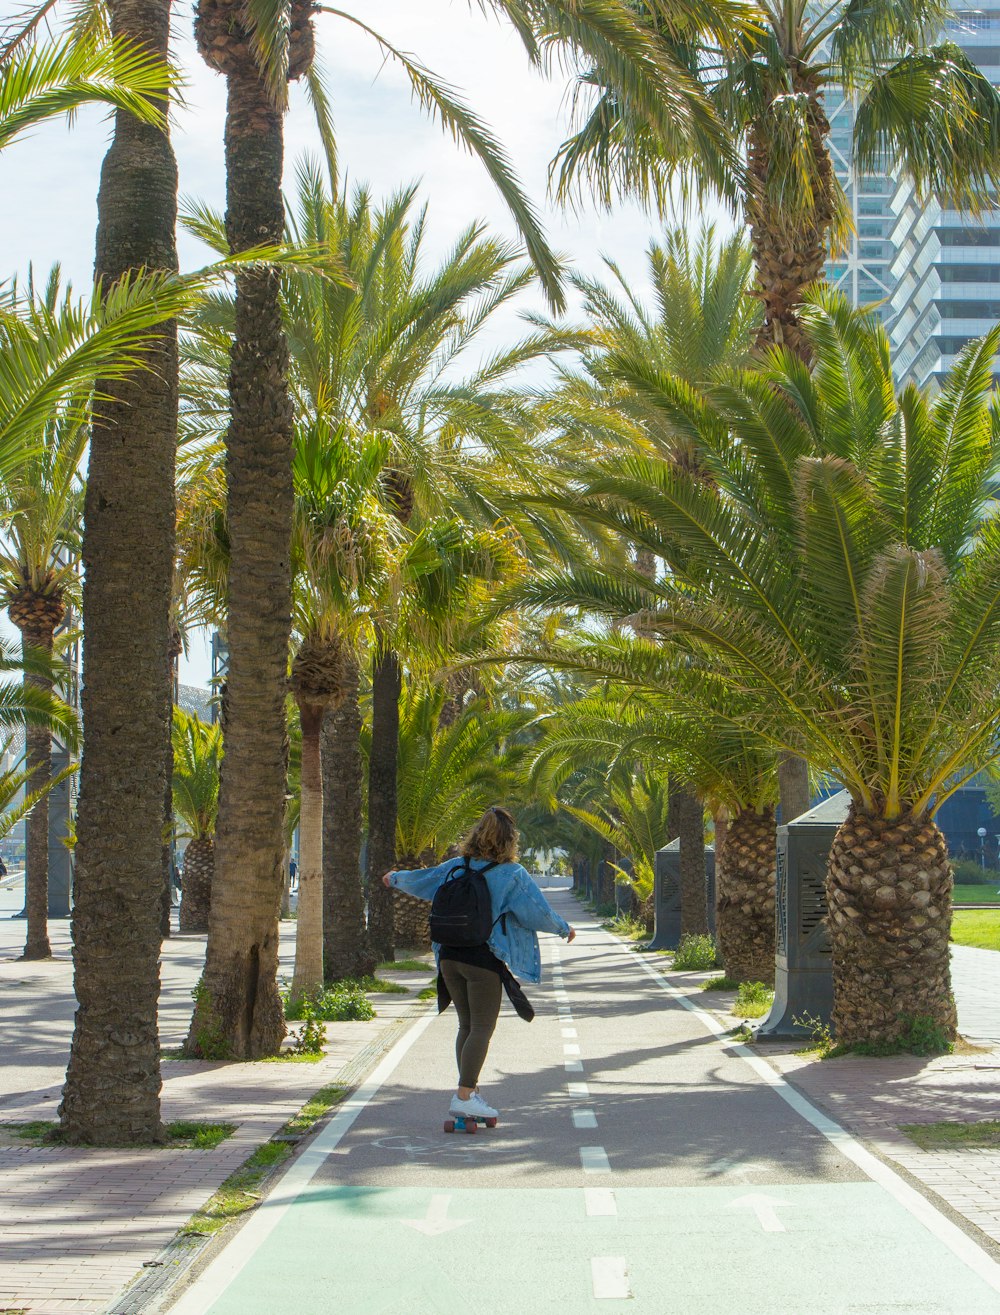 a man riding a skateboard down a street next to palm trees